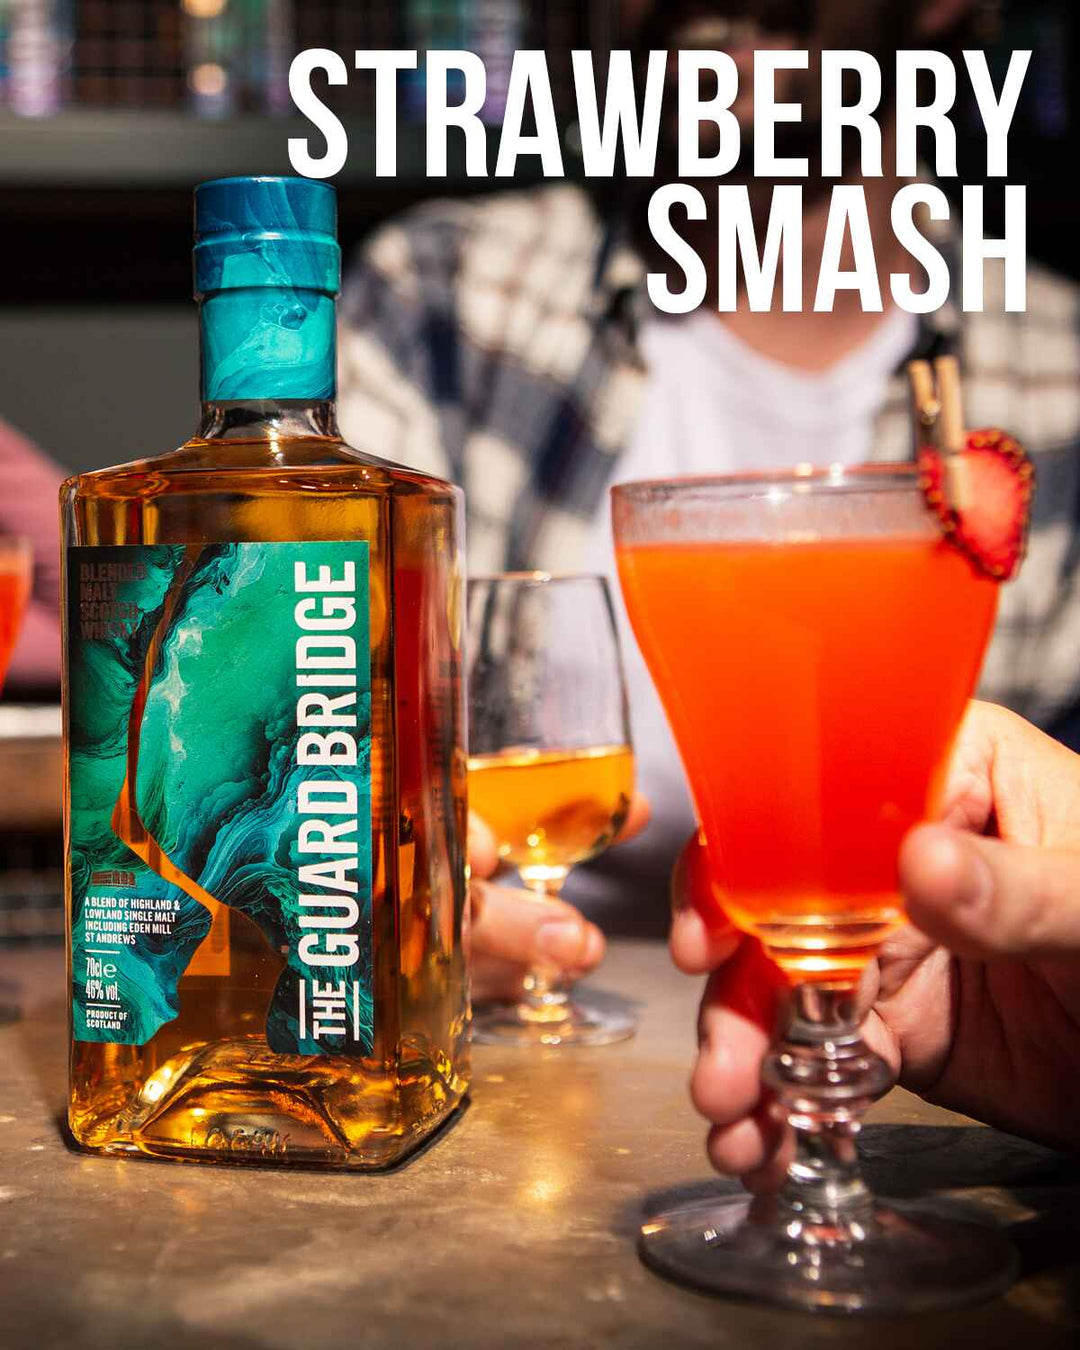 The Strawberry Smash | The Guard Bridge Blended Malt Whisky